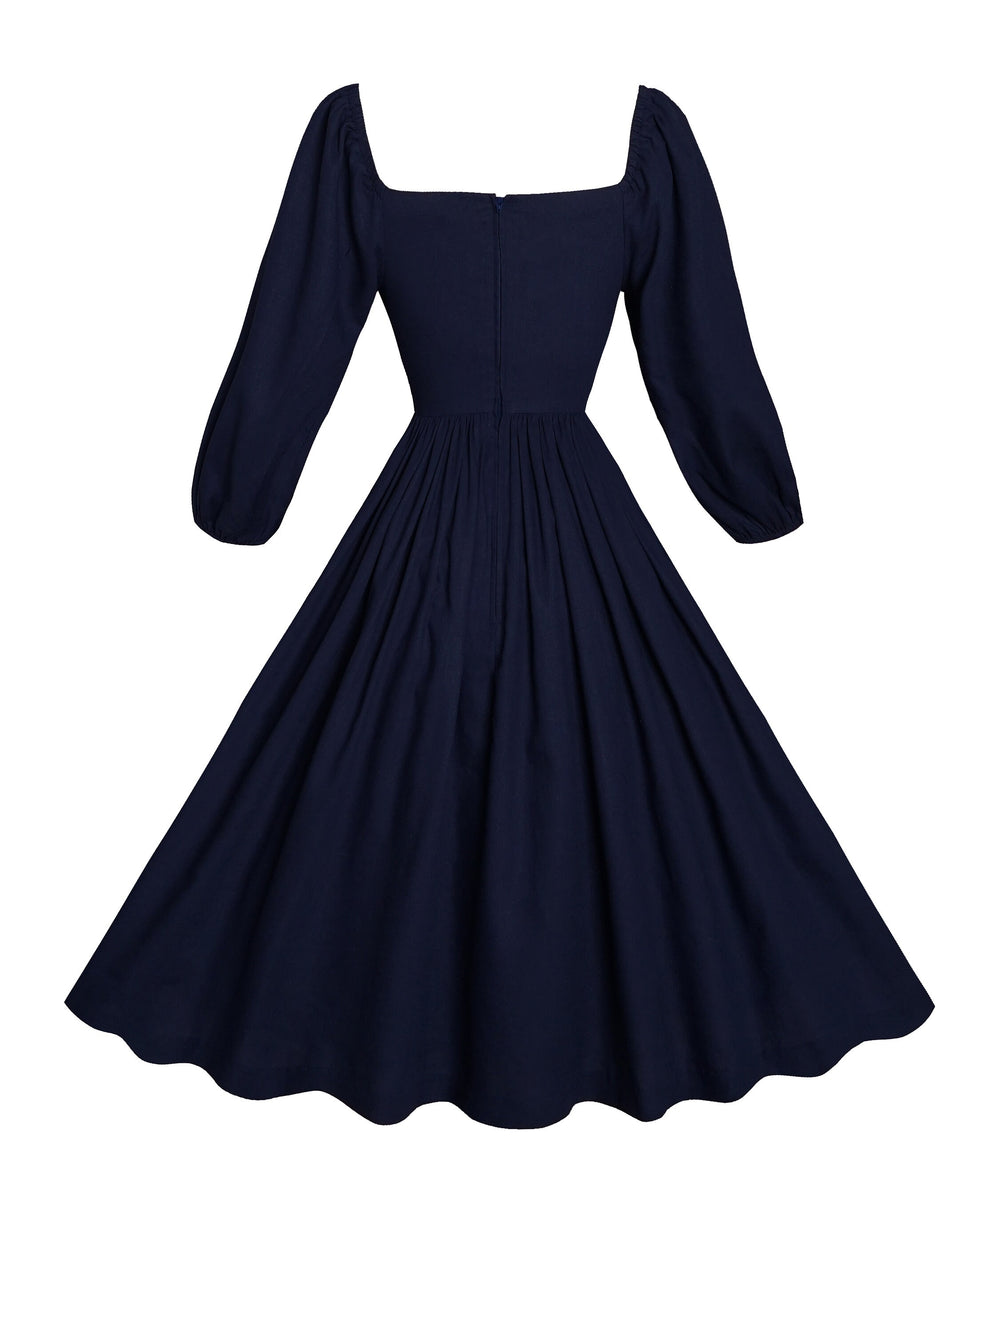 MTO - Sydney Dress in Indigo Blue Linen